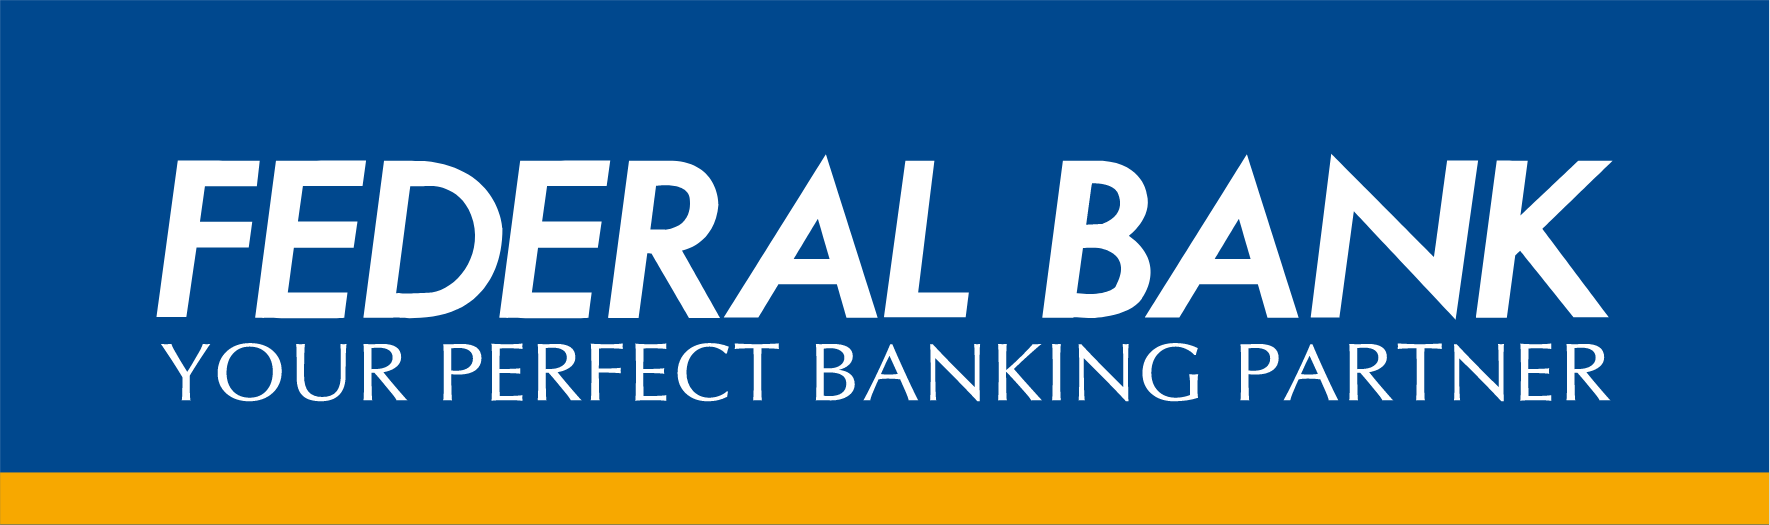 Federal Bank logo large (transparent PNG)